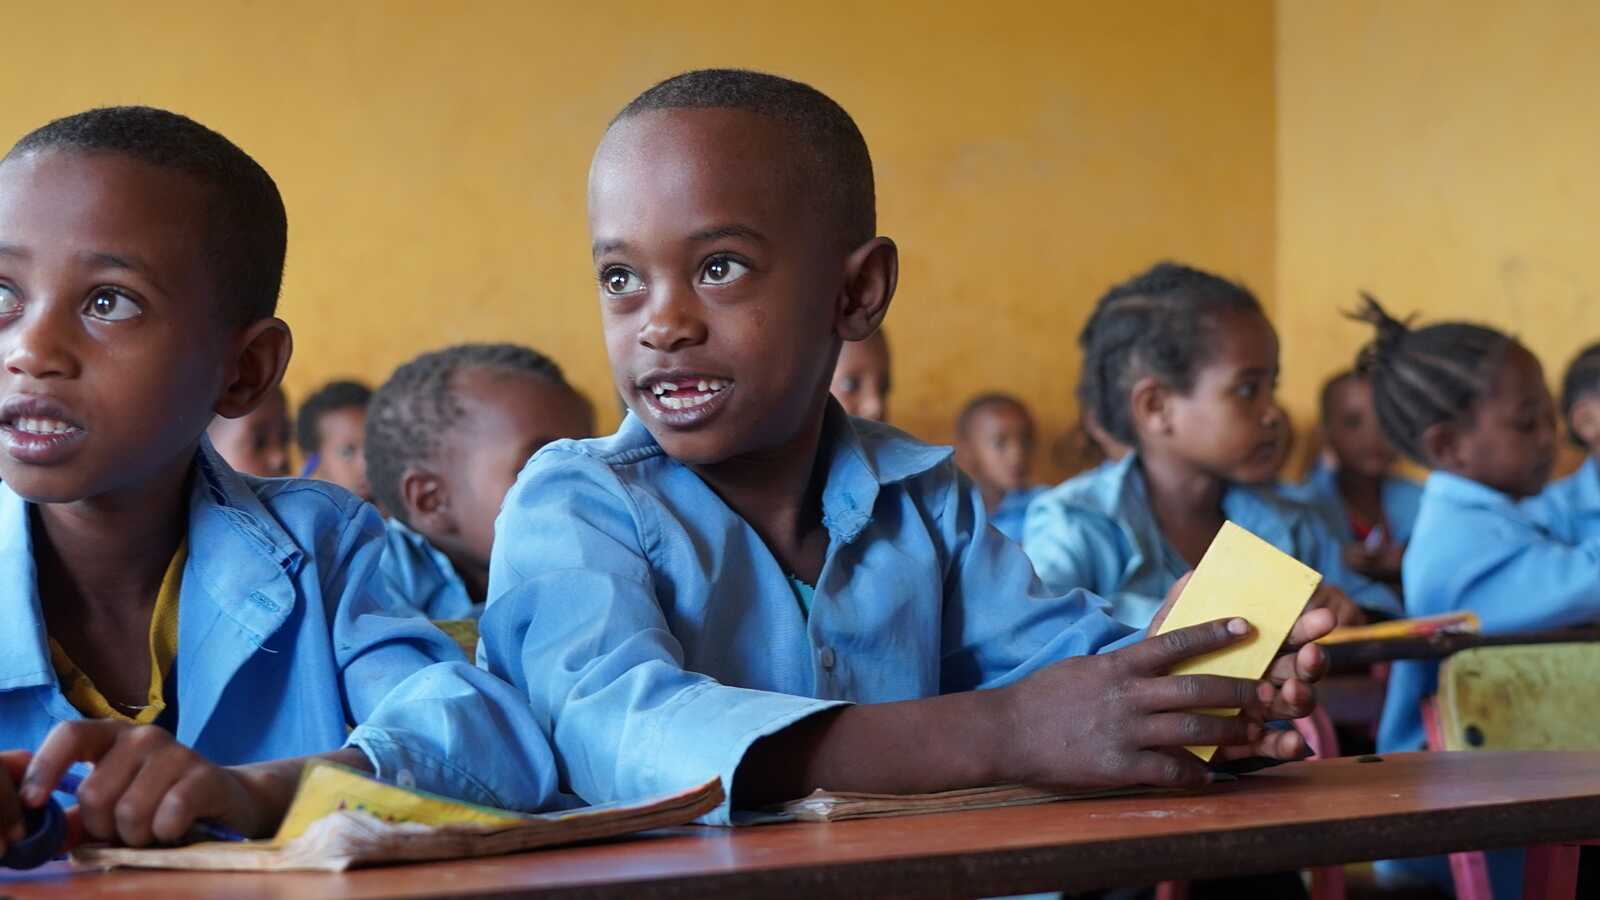 Children in uniforms sit at desks in Wallana classroom in Ethiopia